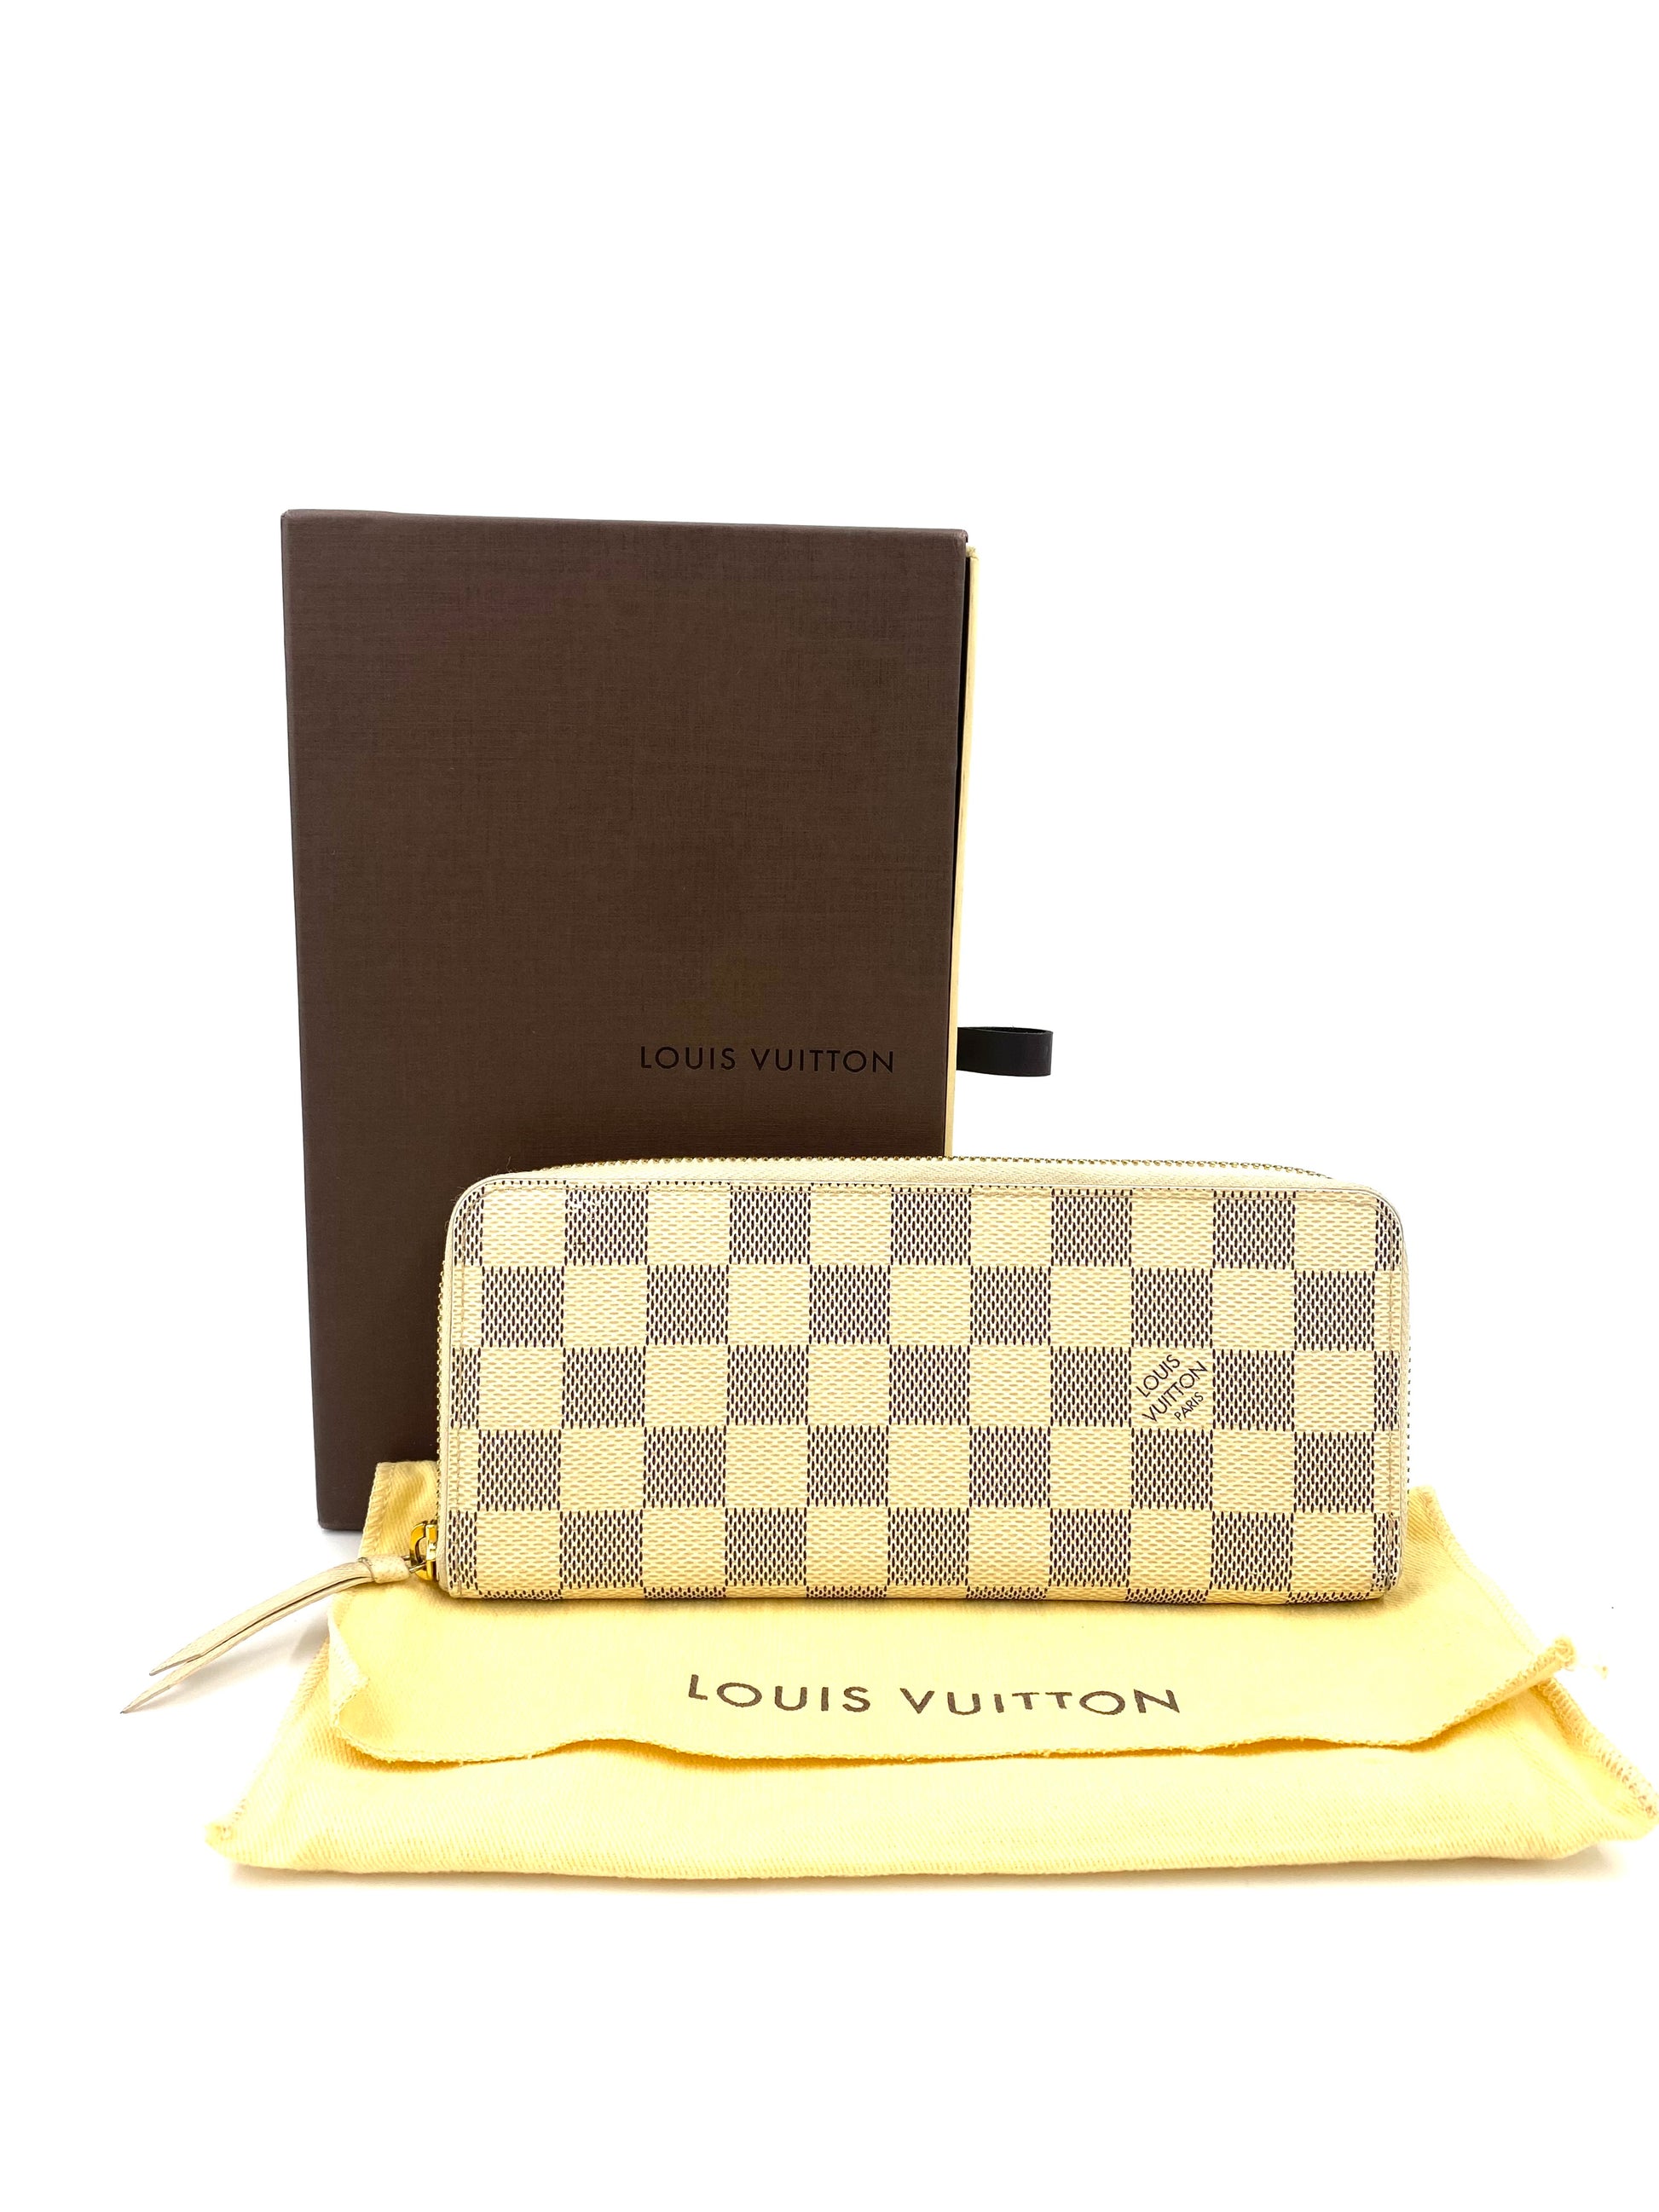 Louis Vuitton Wallet Clemence Damier azur